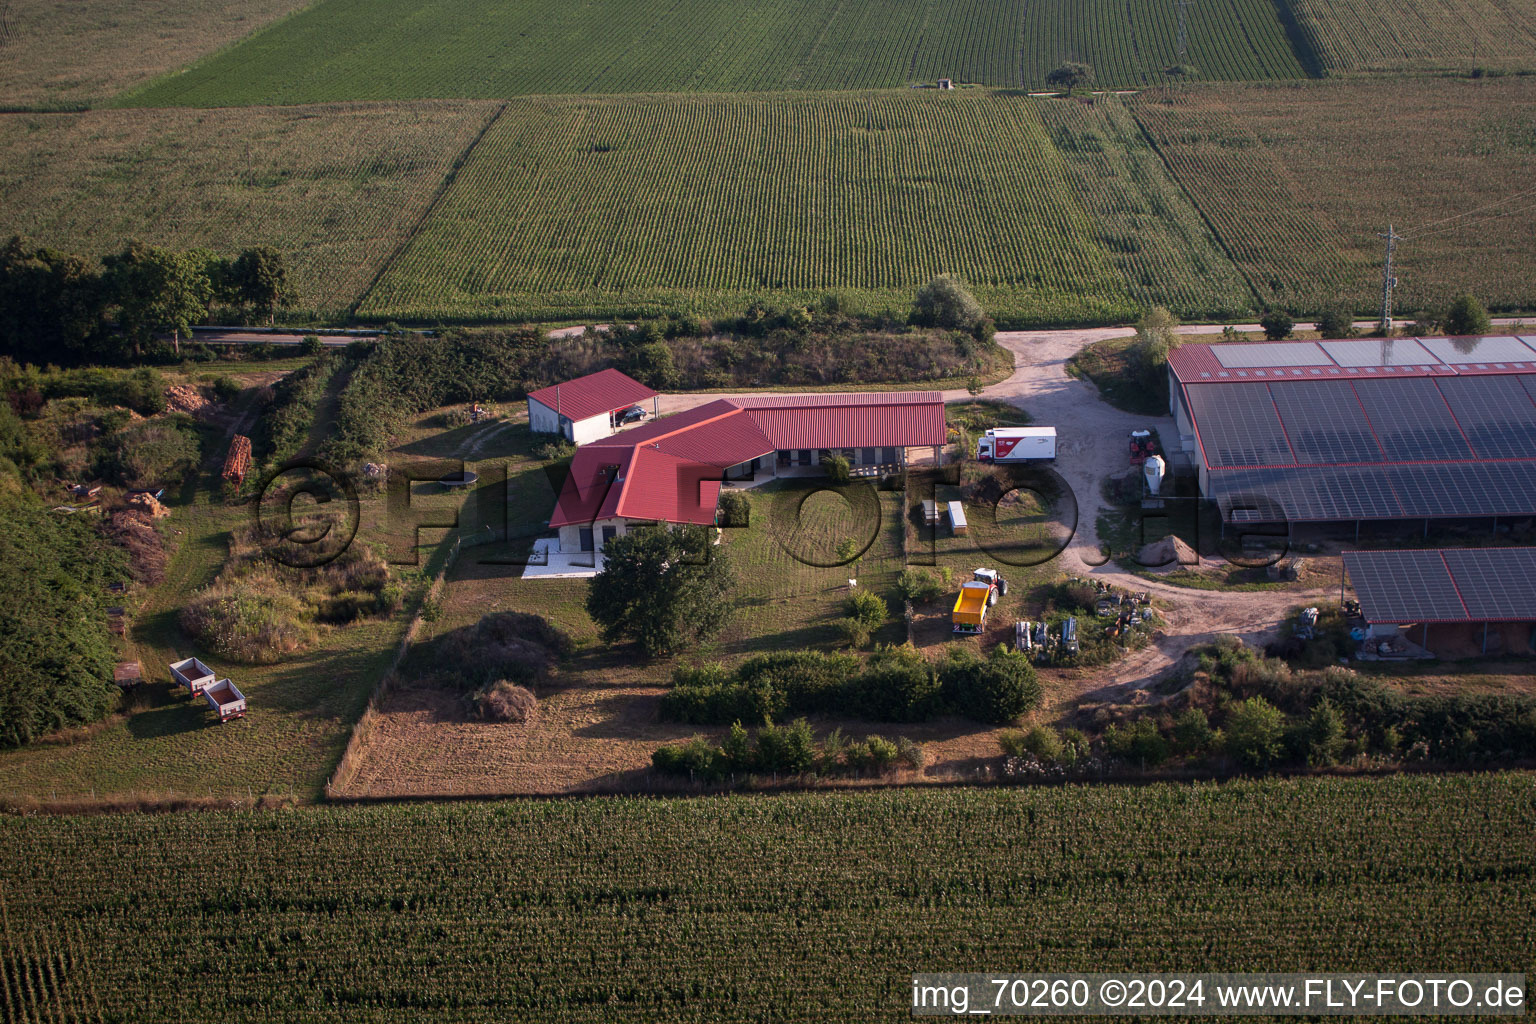 Aerial view of Chicken farm Aussiedlerhof in Erlenbach bei Kandel in the state Rhineland-Palatinate, Germany